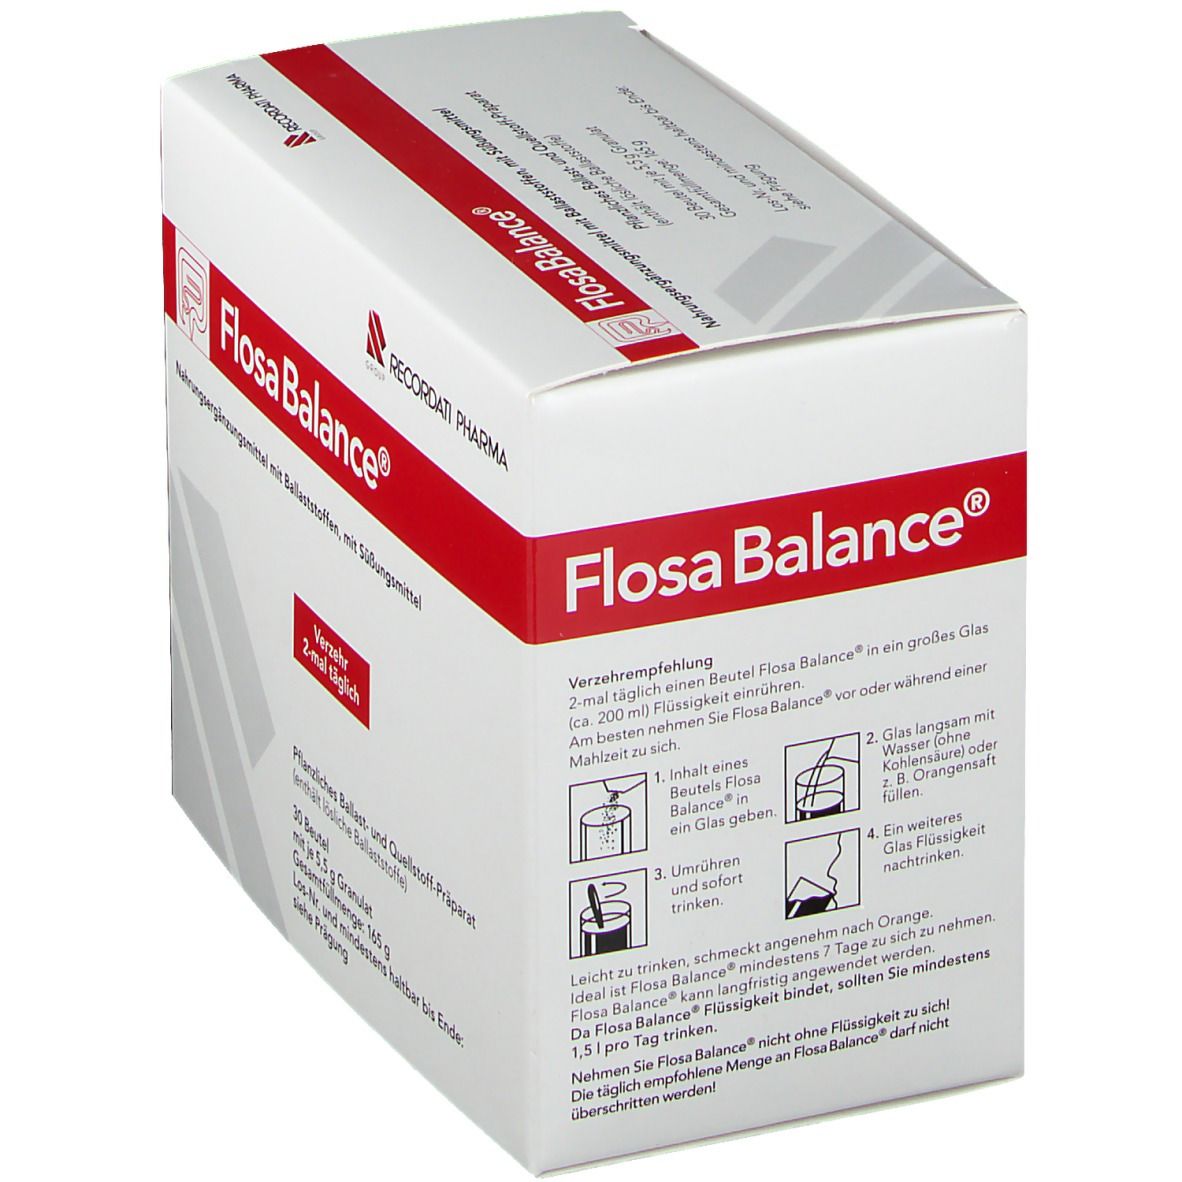 Flosa Balance® Granulat Beutel